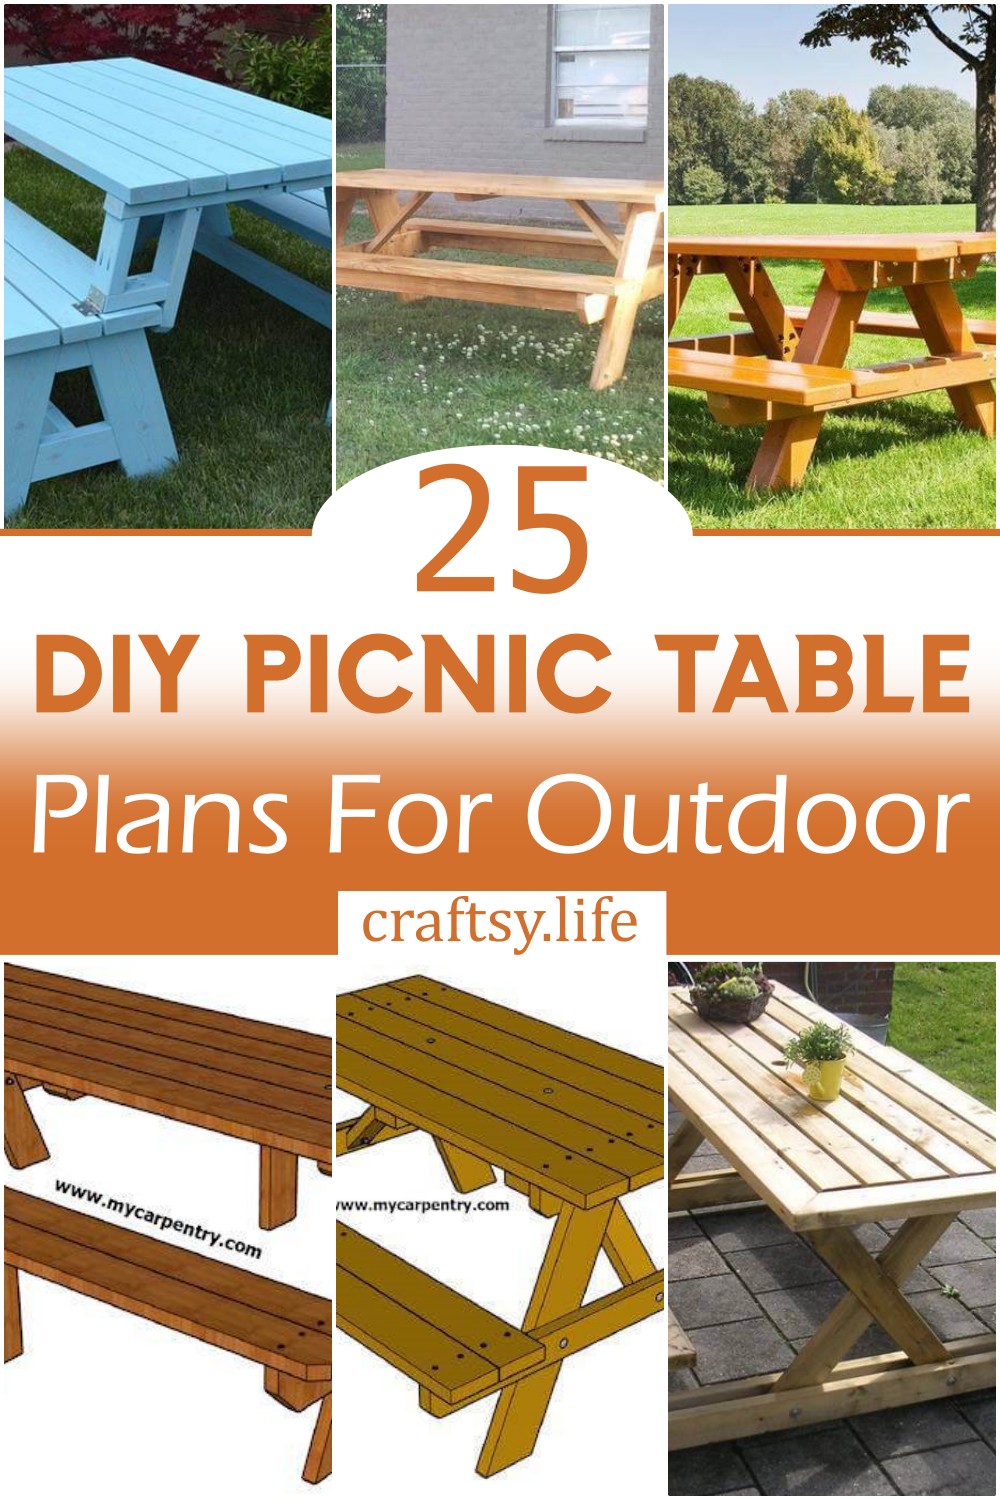 DIY Picnic Table Plans 1